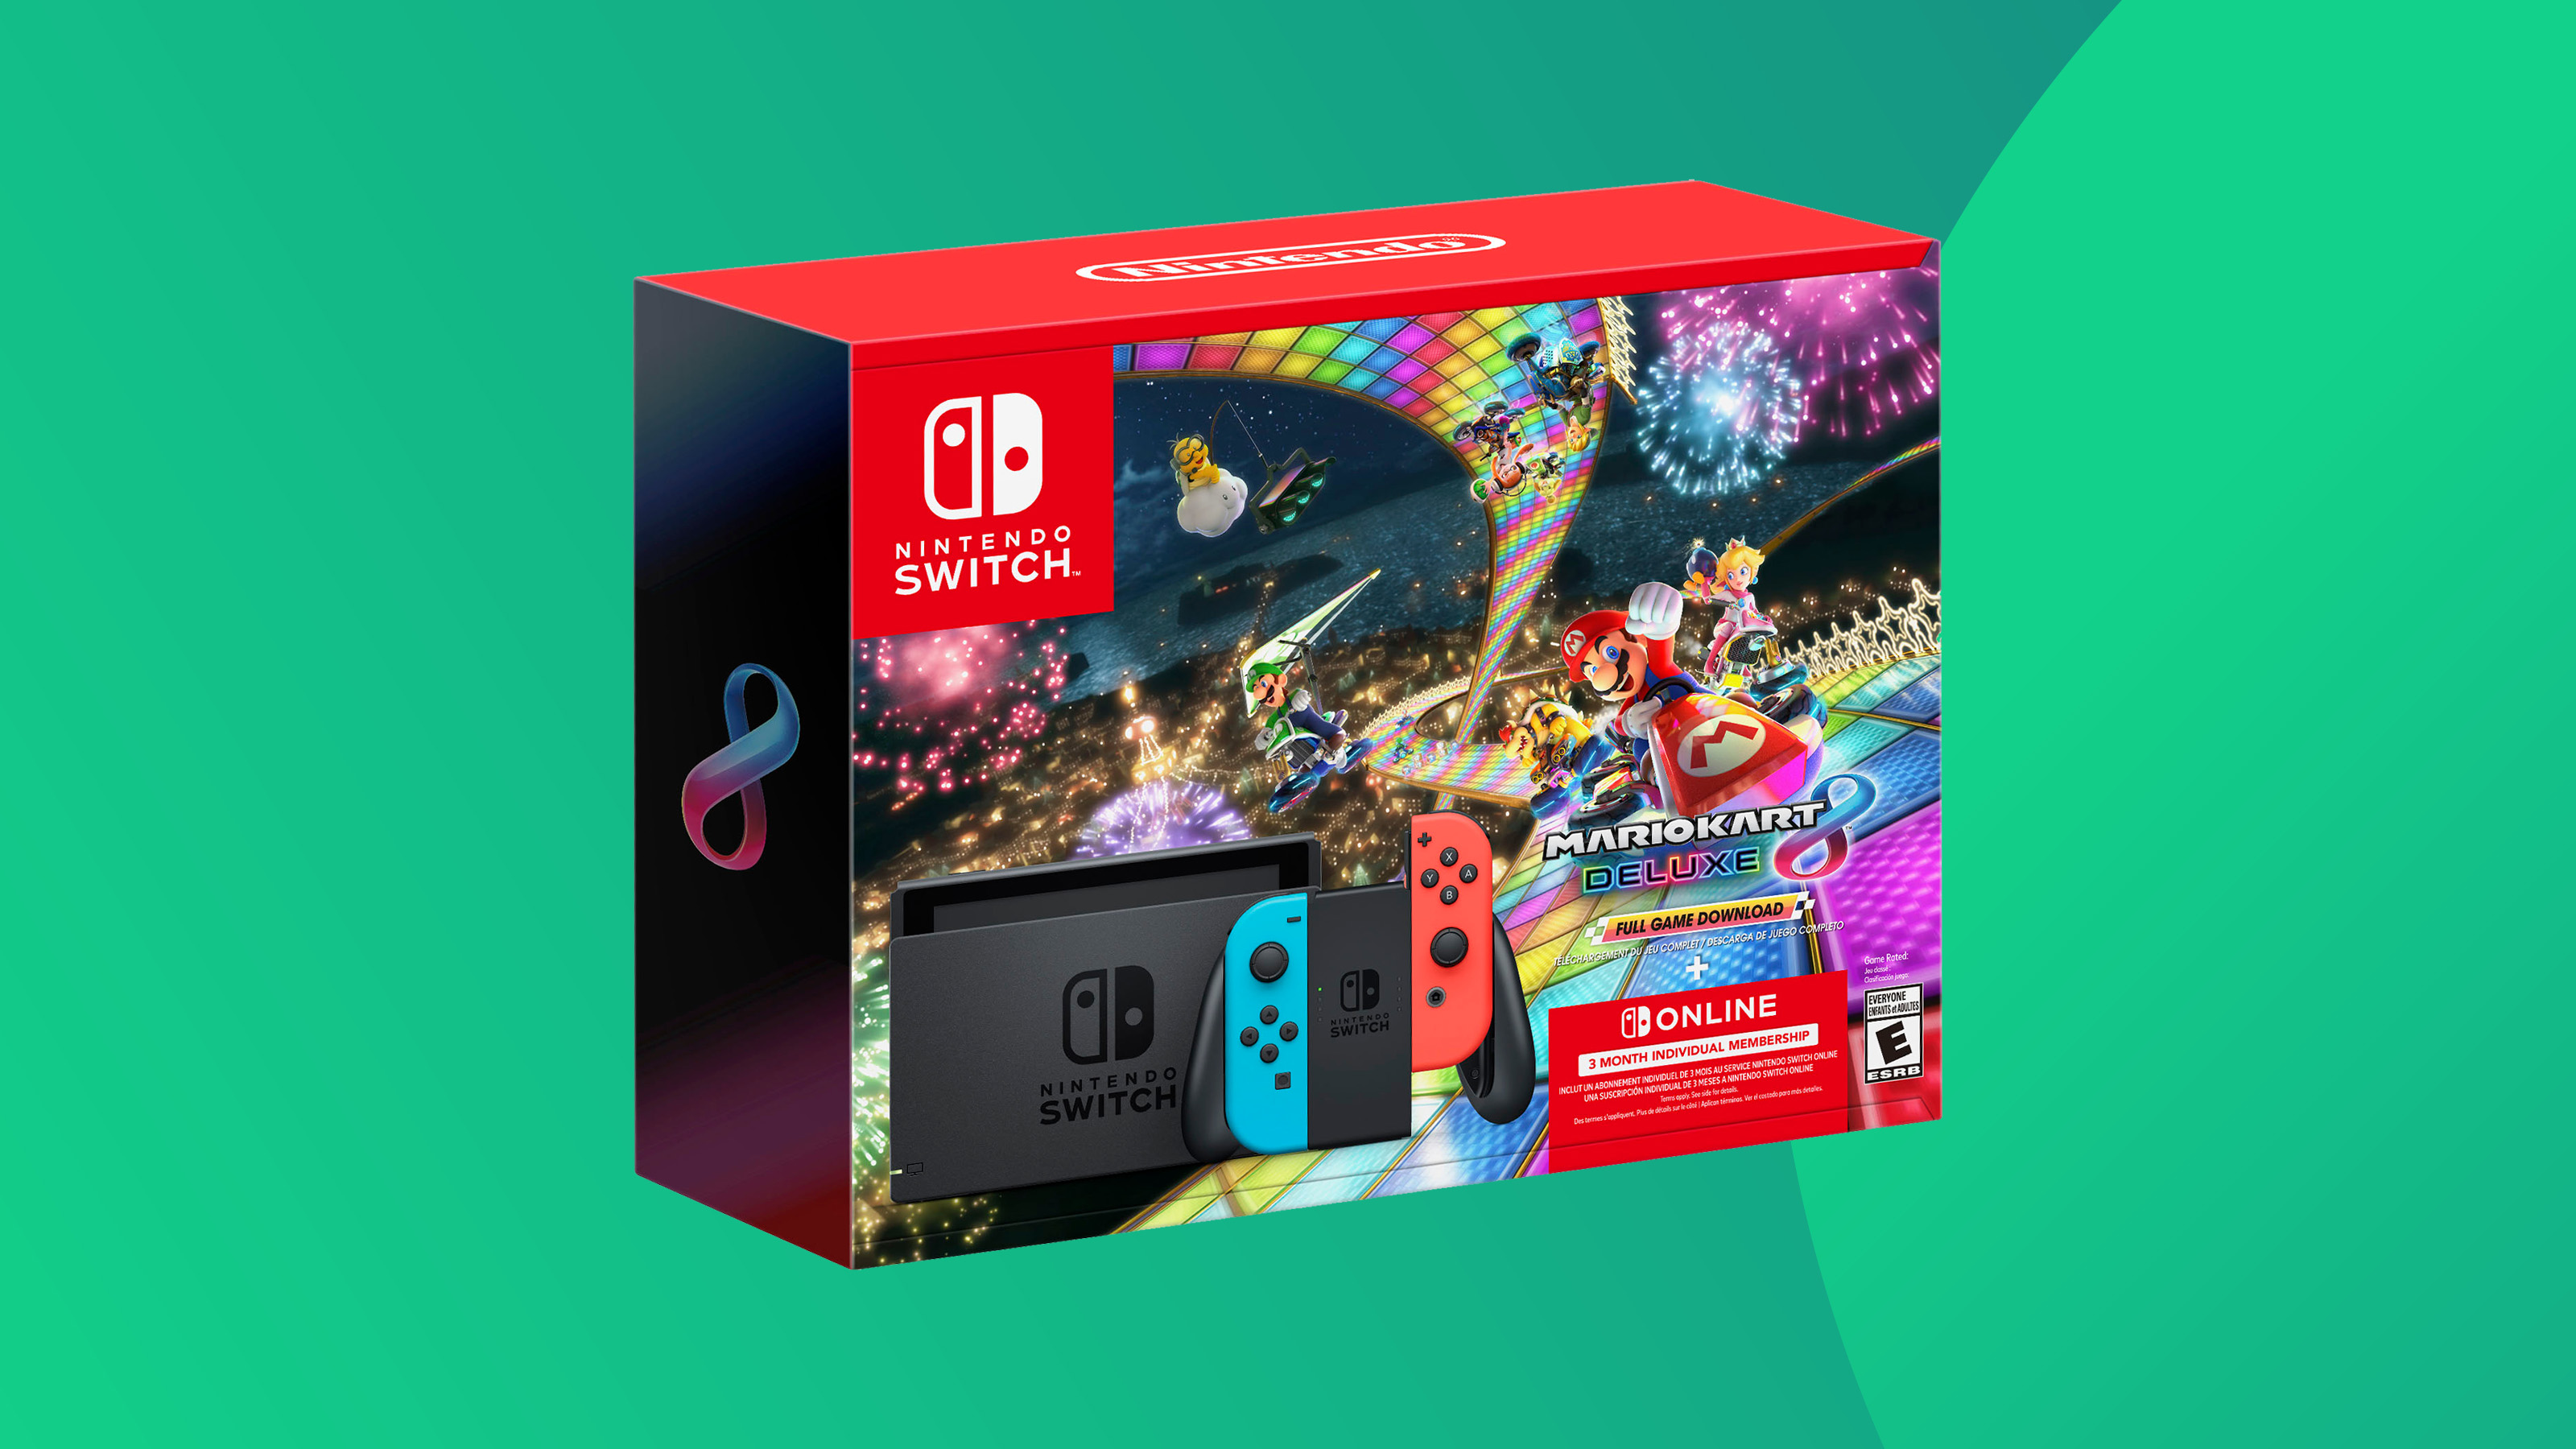 Promotional shot of the Nintendo Switch bundle